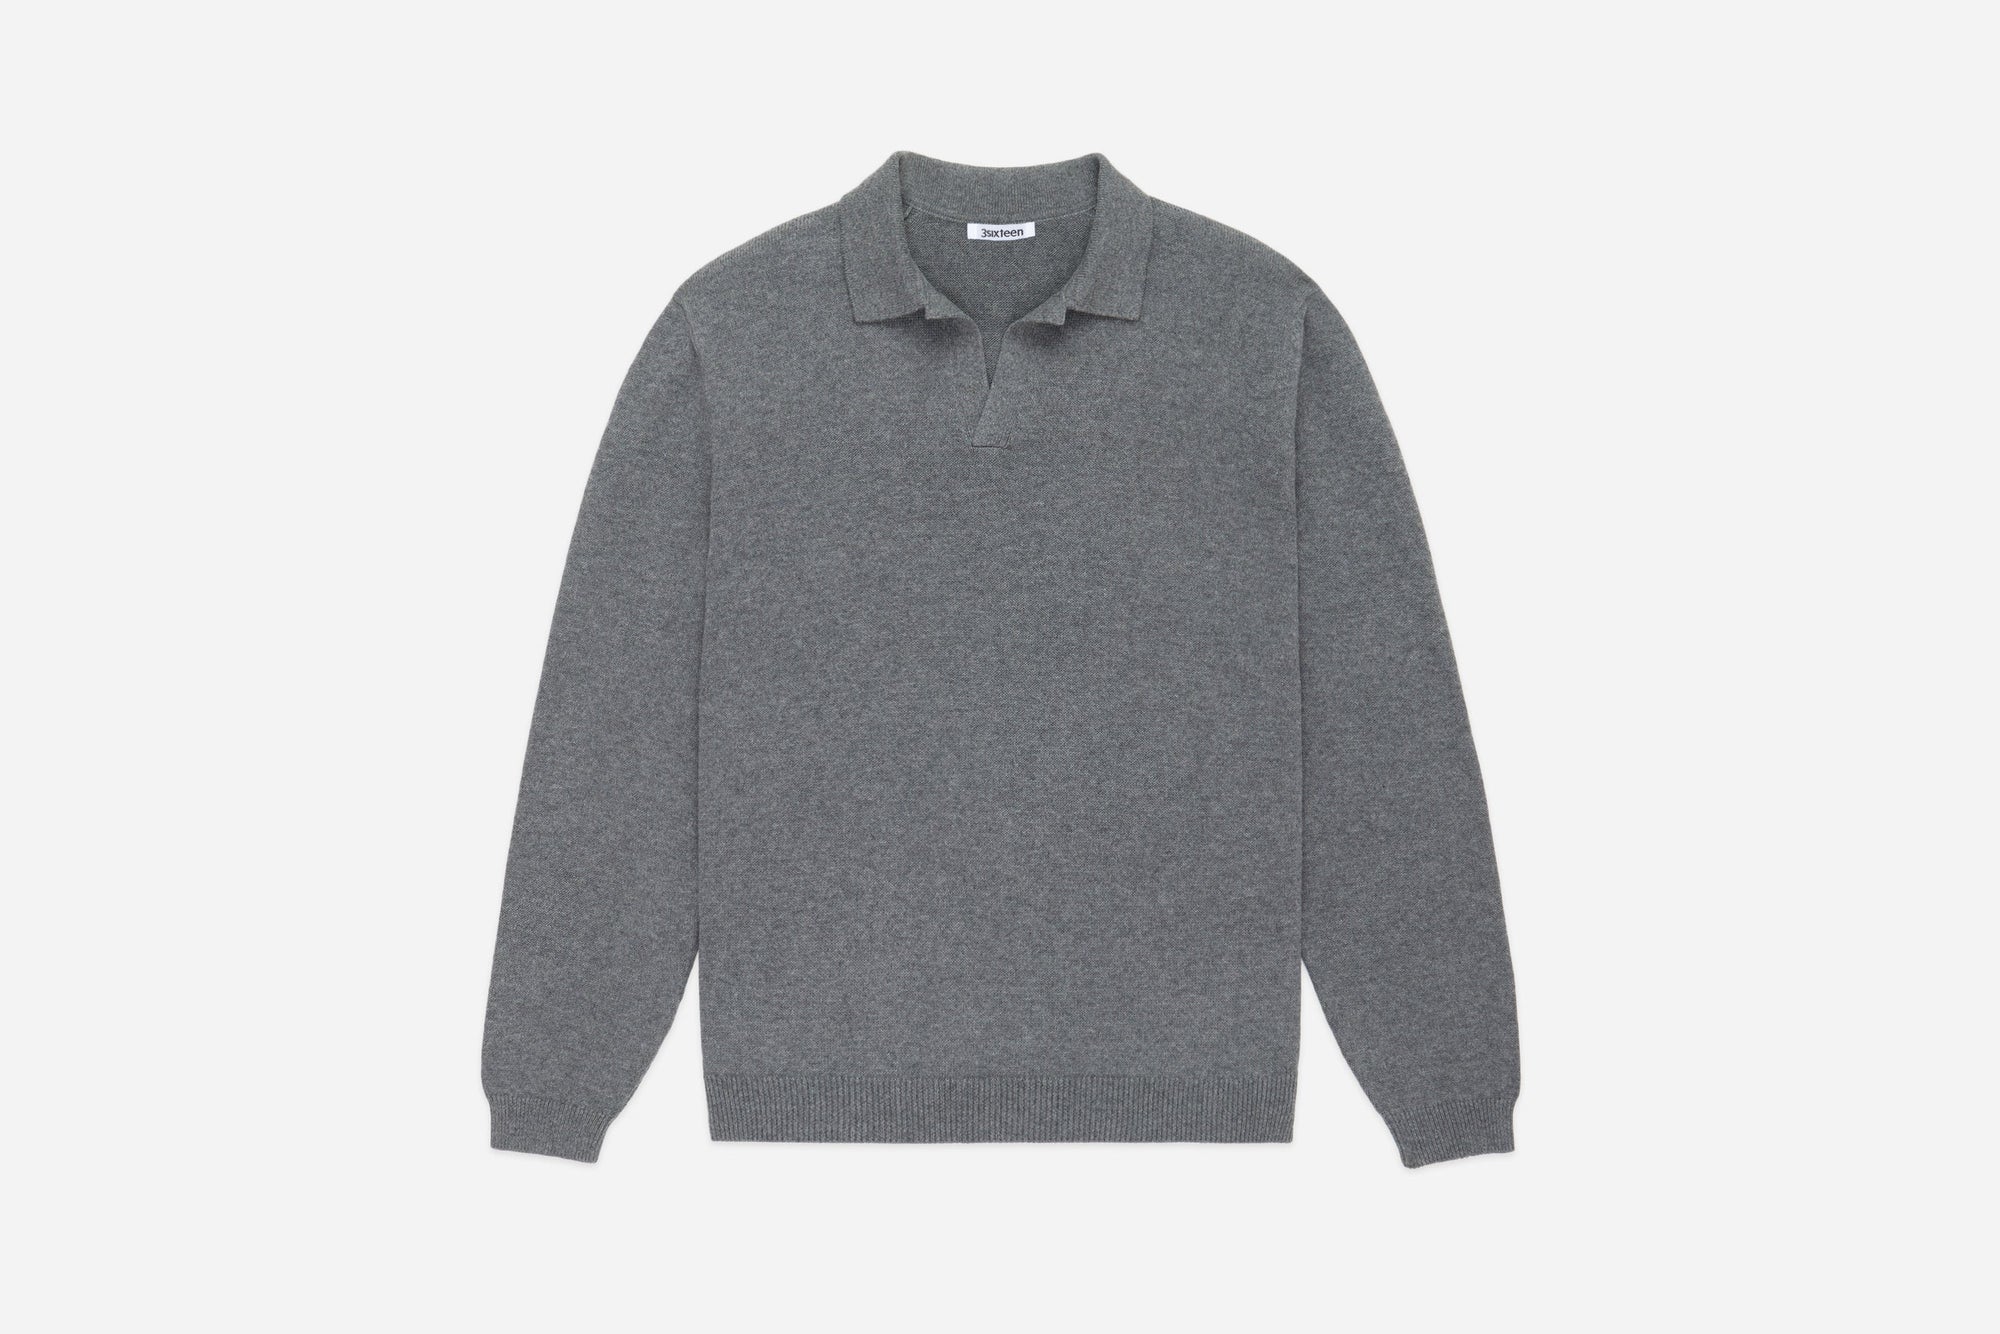 3Sixteen Long Sleeve Knit Polo in Grey